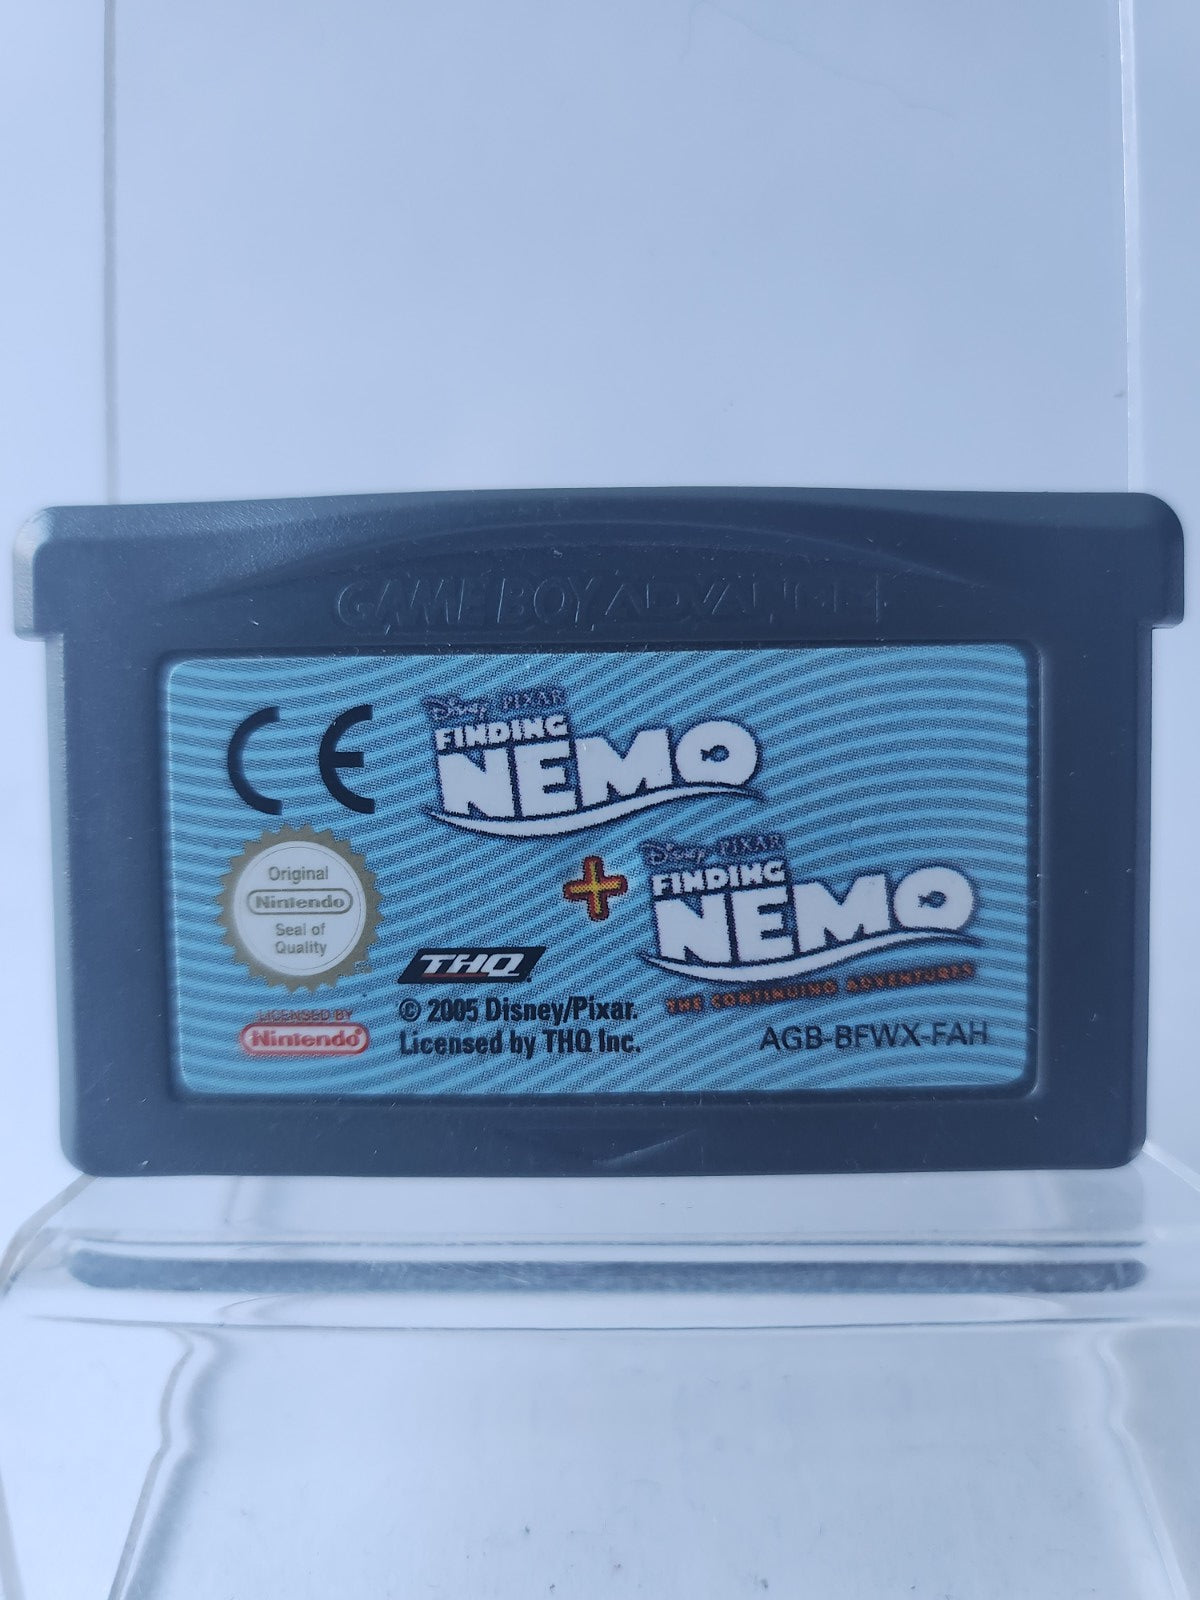 2 x Finding Nemo Nintendo Game Boy Advance